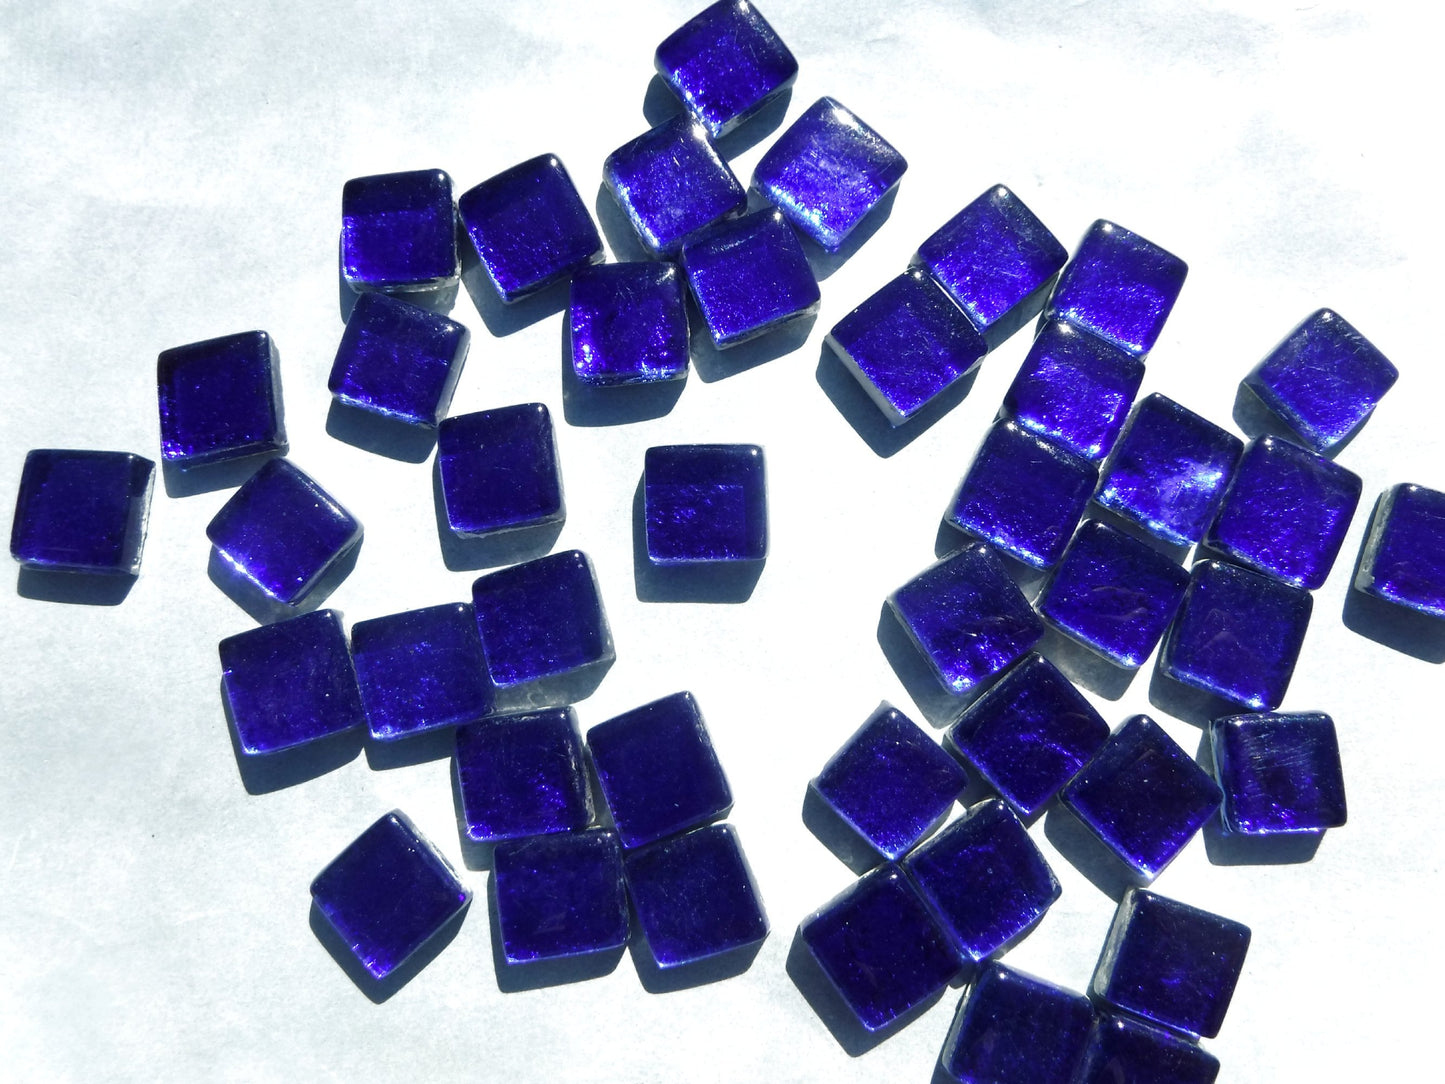 Cobalt Blue Foil Square Crystal Tiles - 12mm - 50g - Approx 25 Metallic Glass Mosaic Tiles